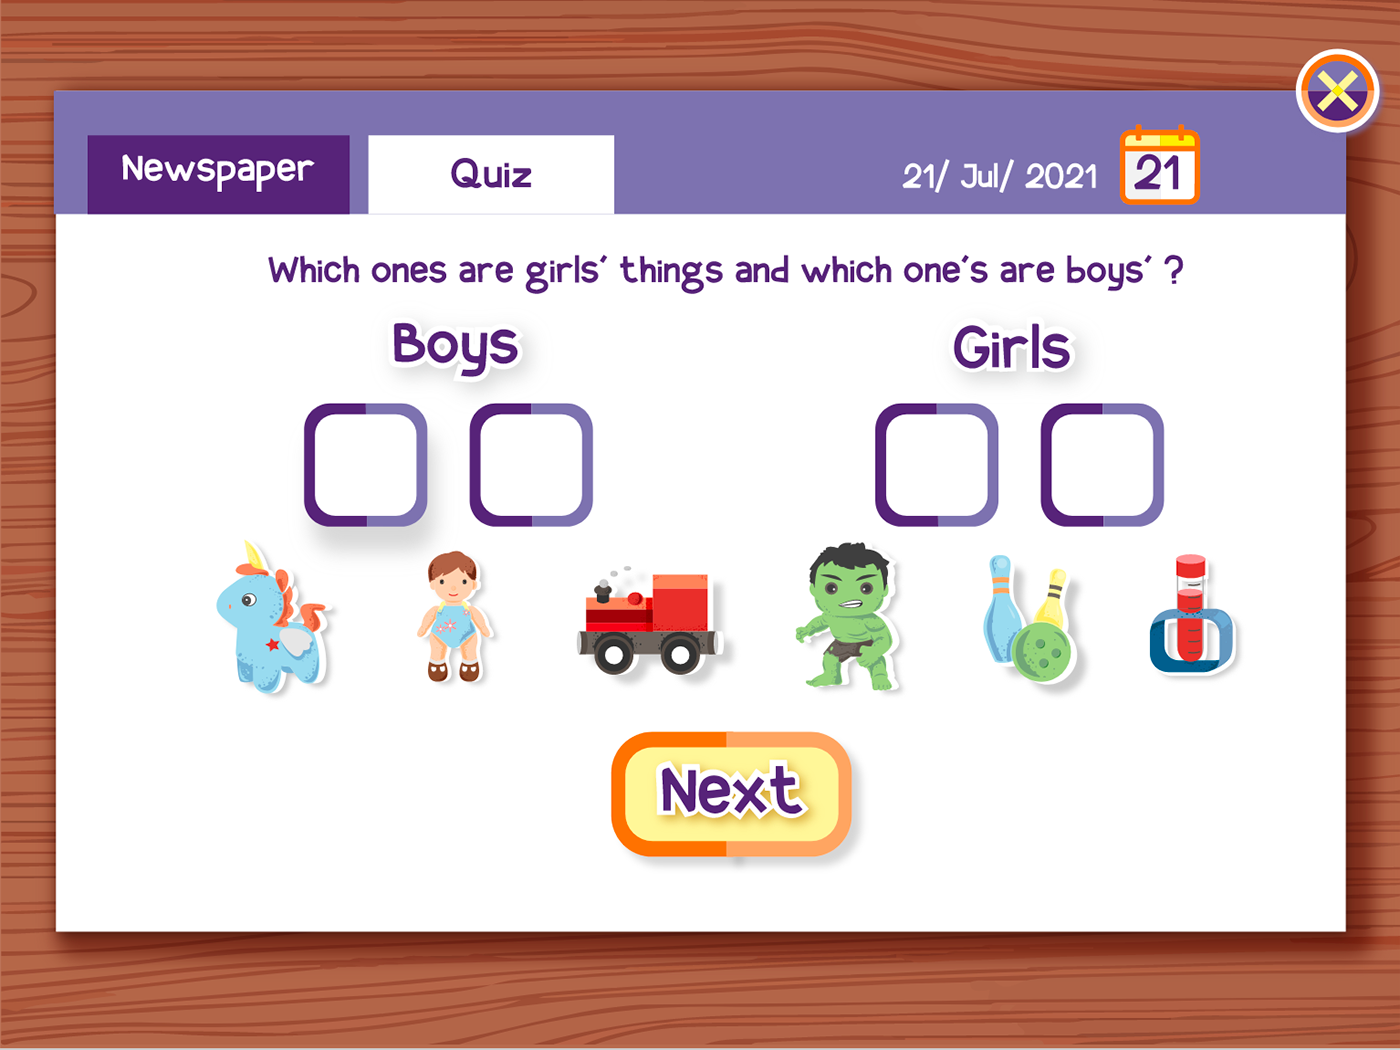 Character children Gender stereotypes toys UI/UX